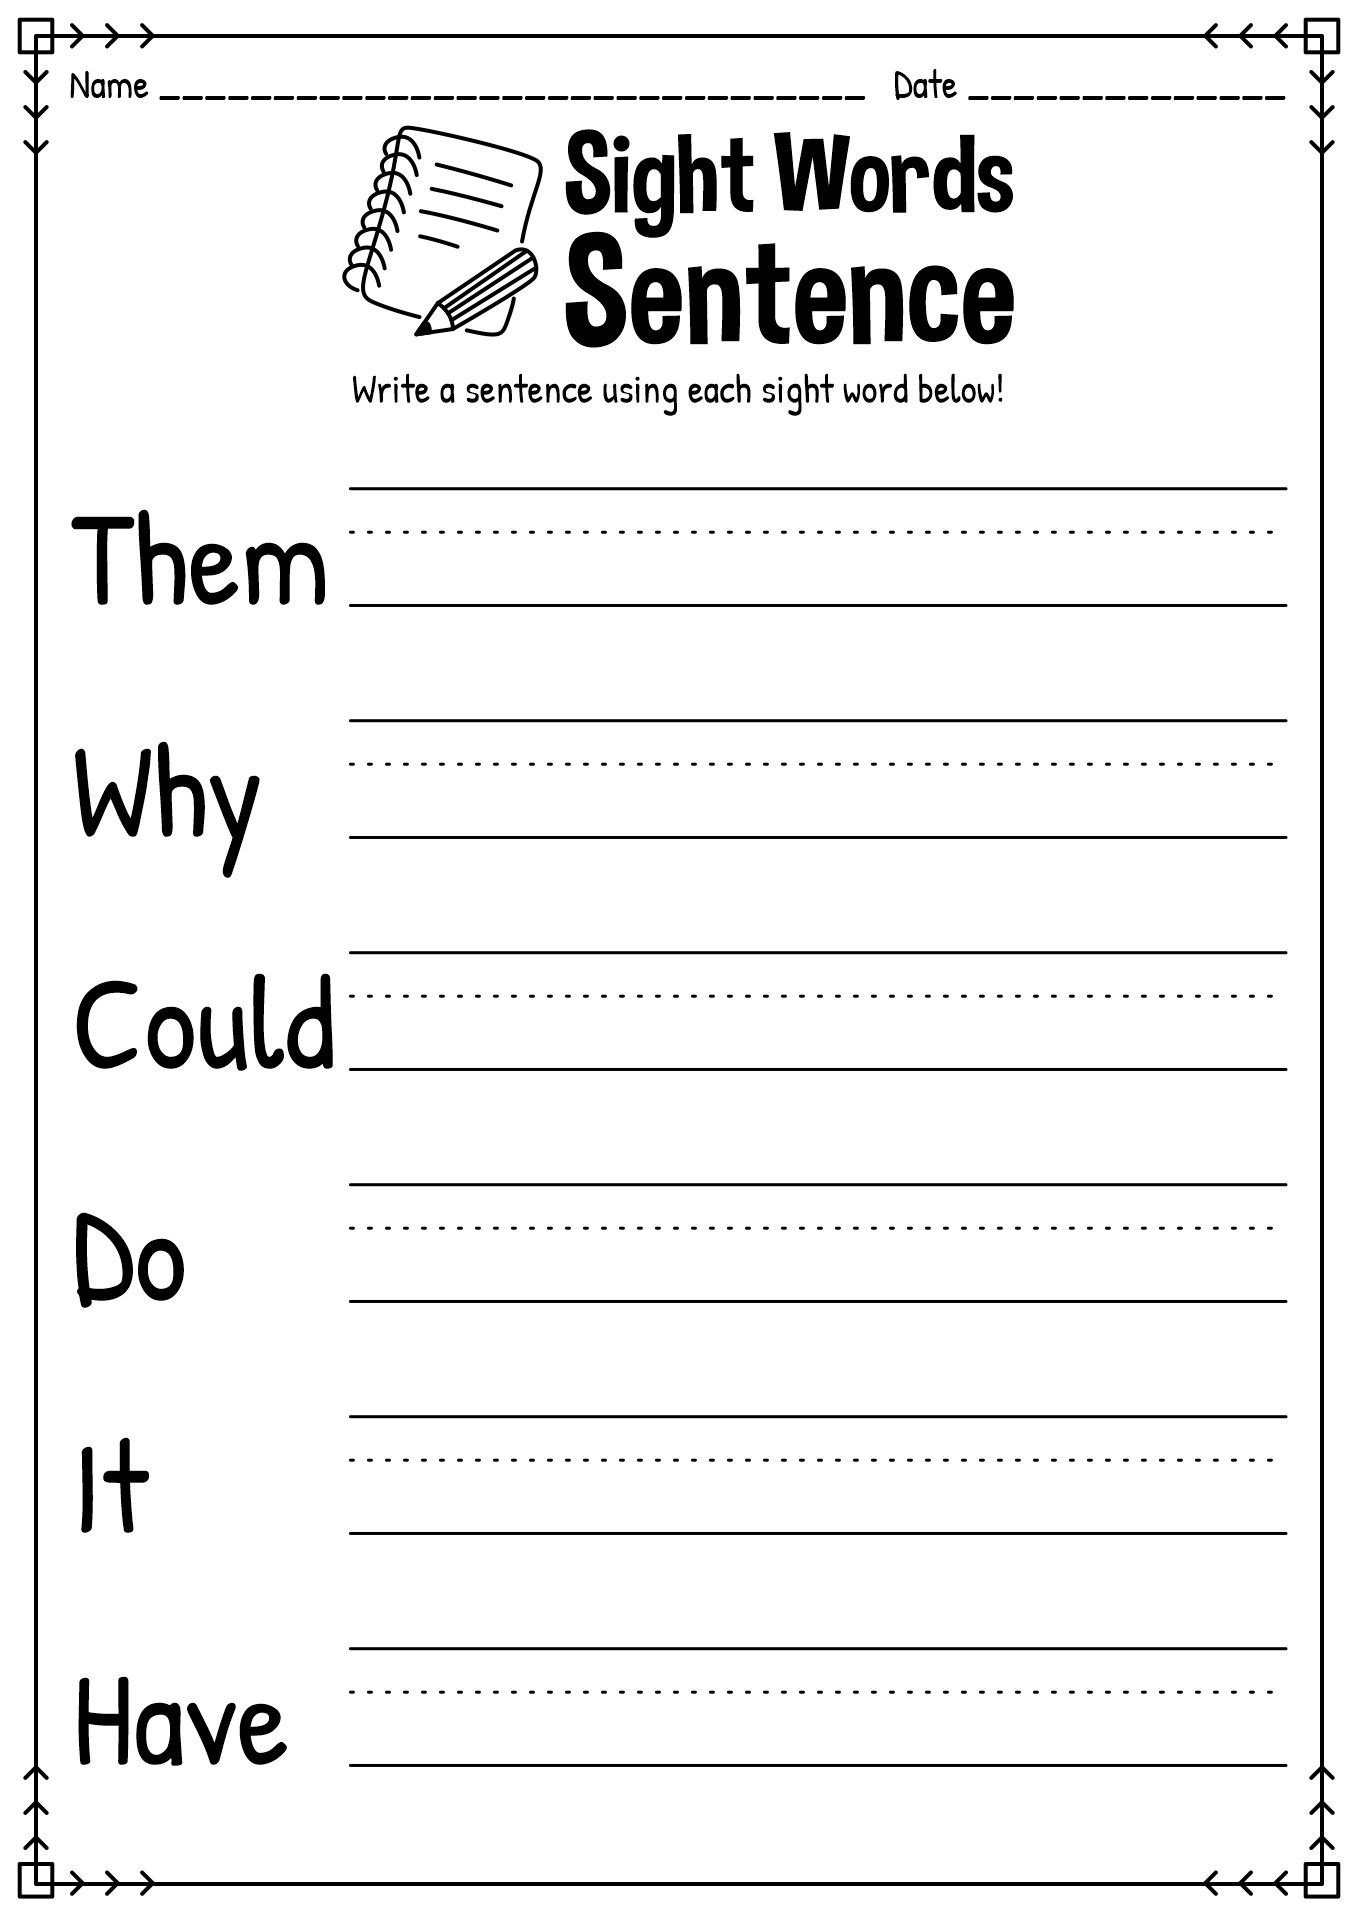 Sight Word Sentence Writing Image